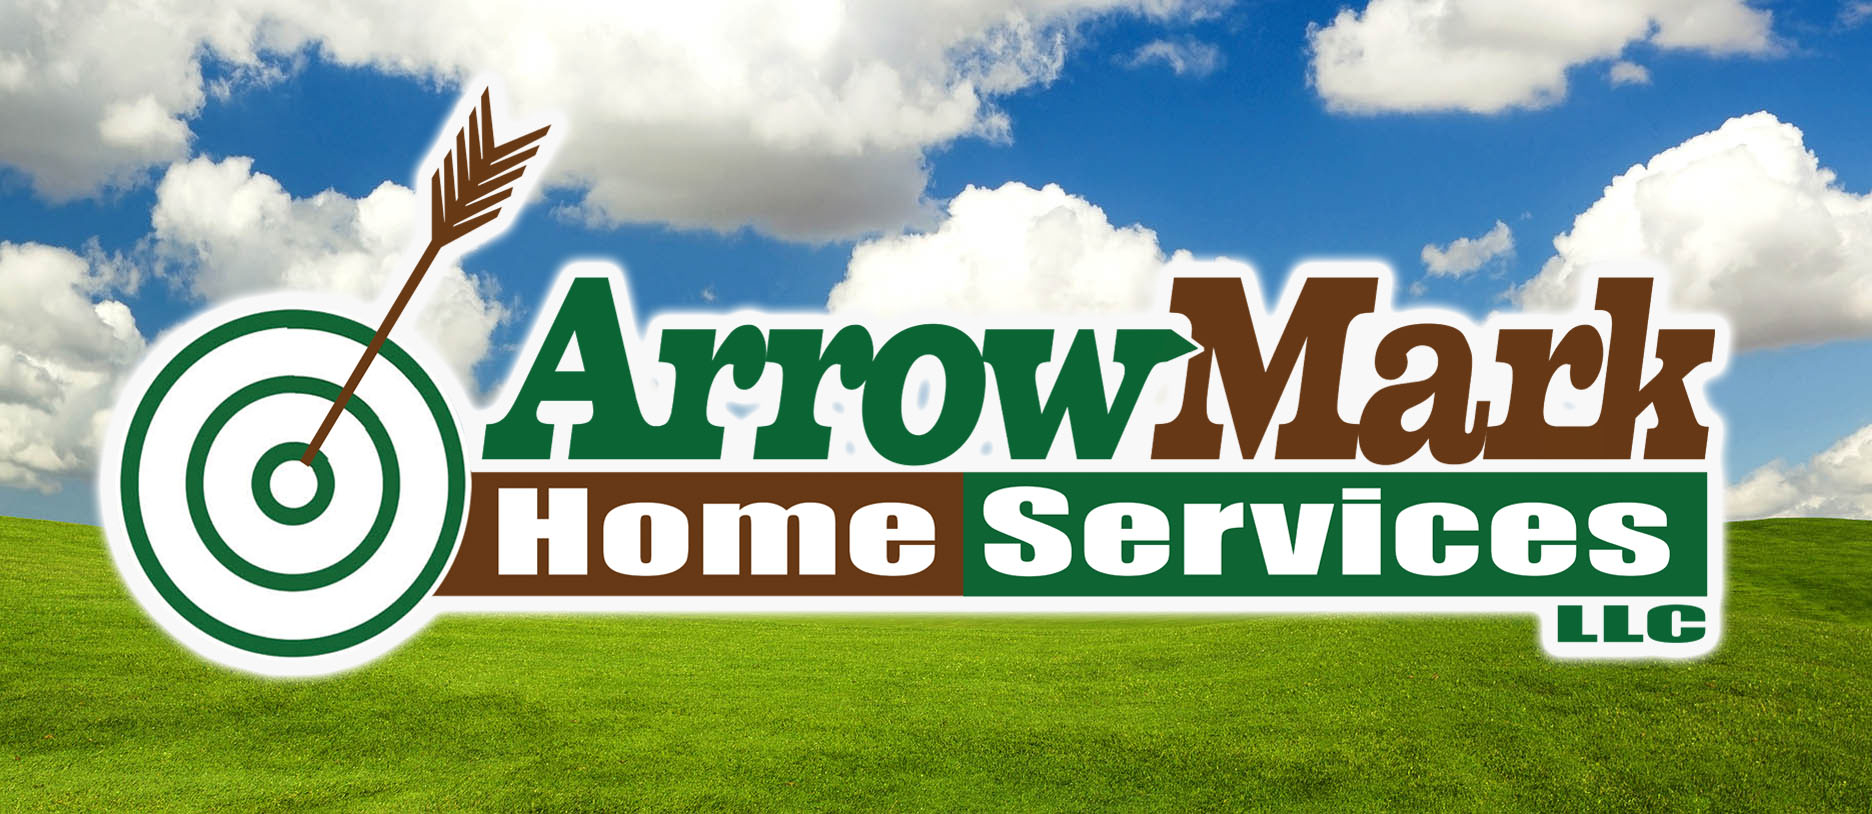 ARROWMARK HOME SERVICES